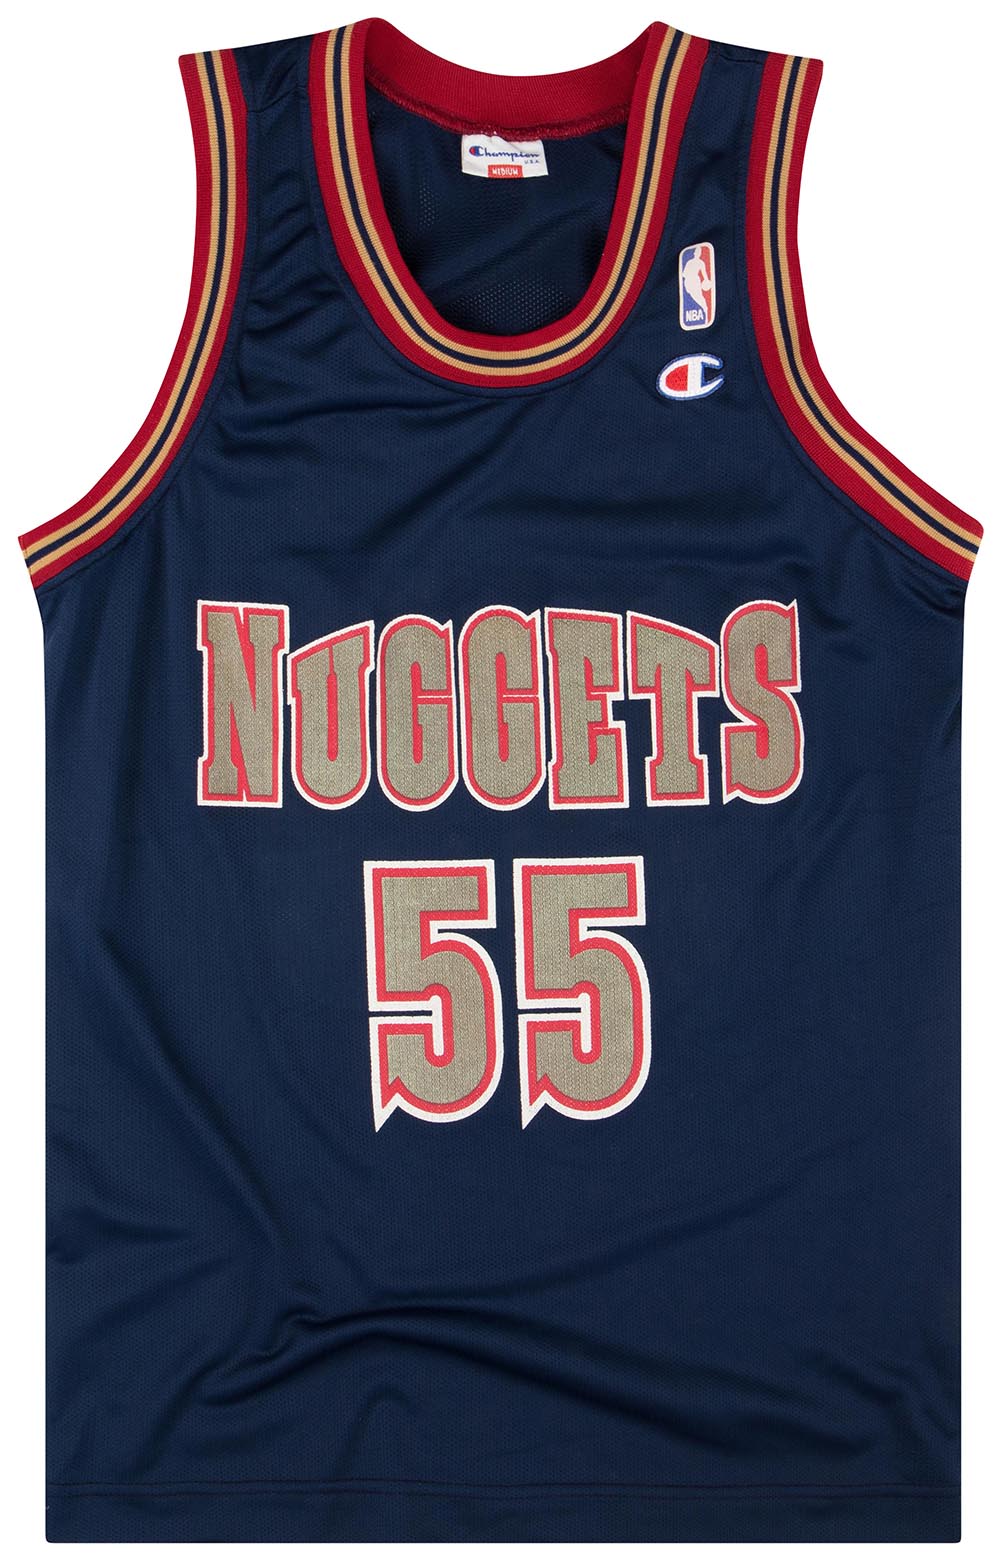 Denver Nuggets Jersey History - Basketball Jersey Archive